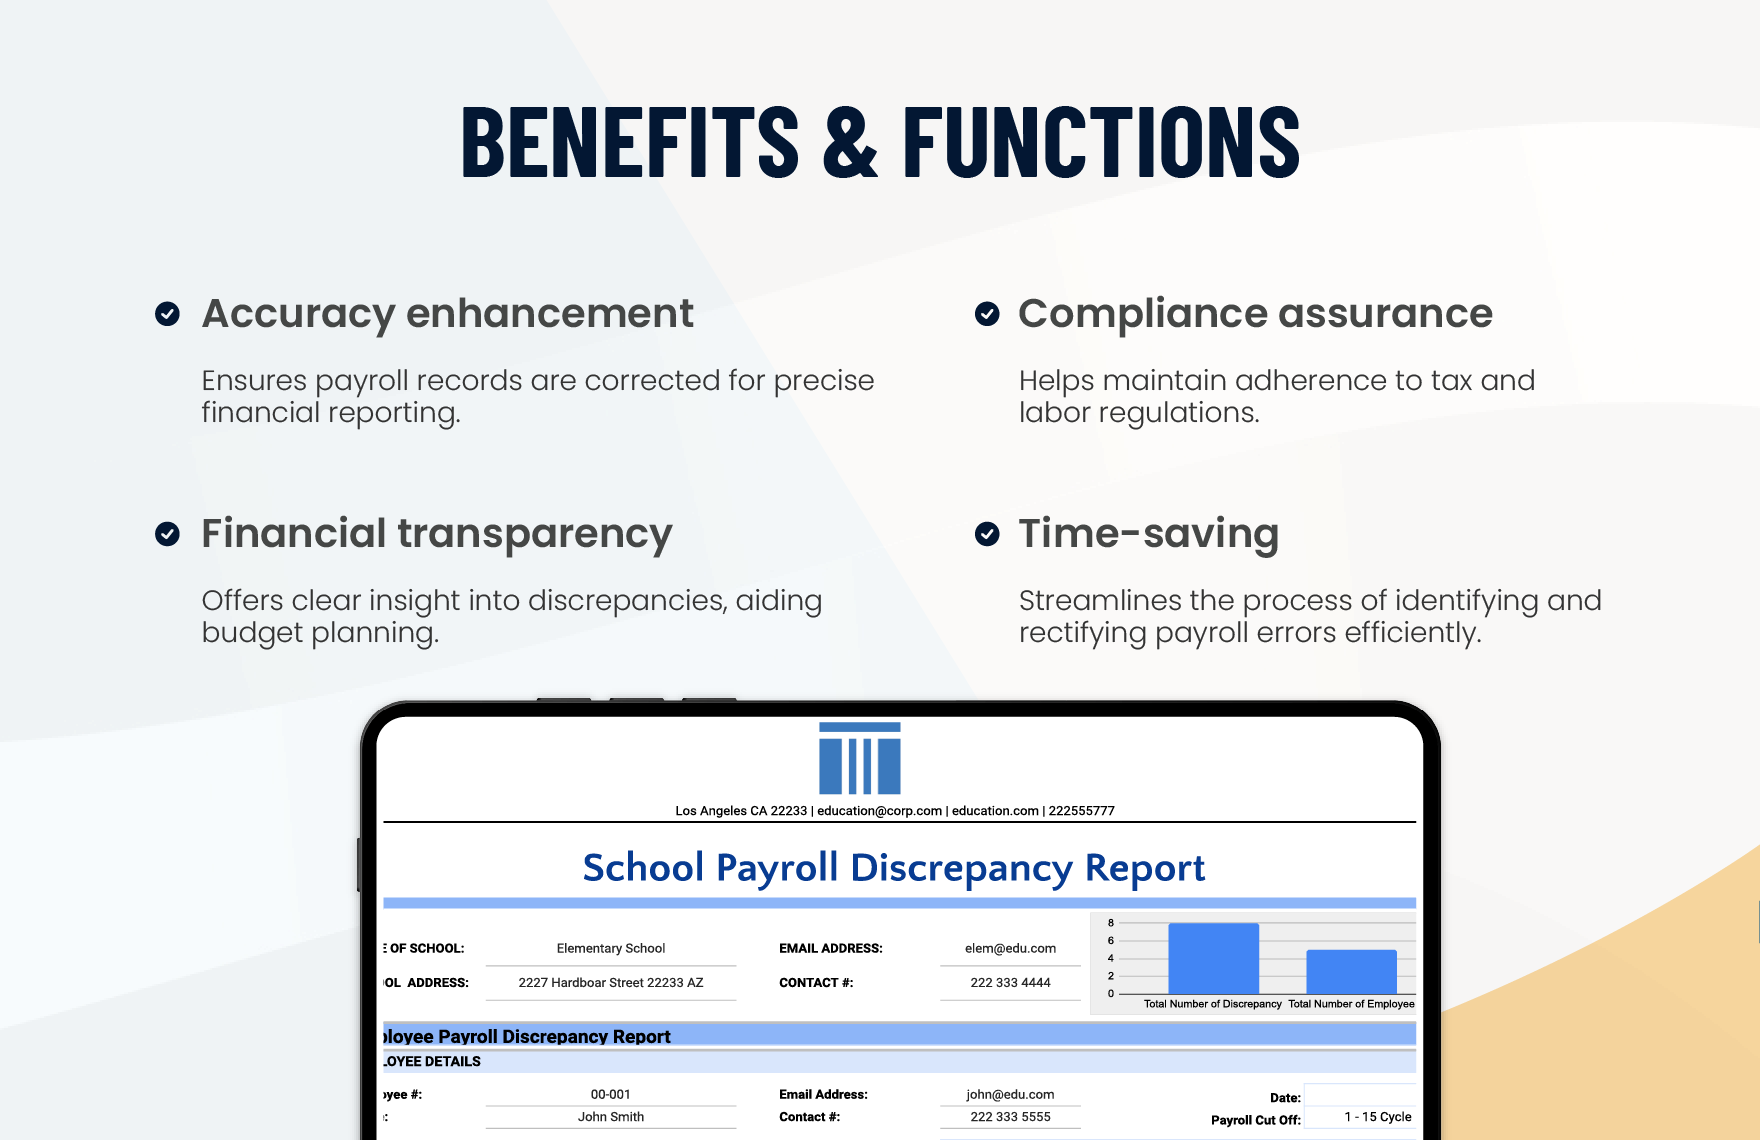 School Payroll Discrepancy Report Template